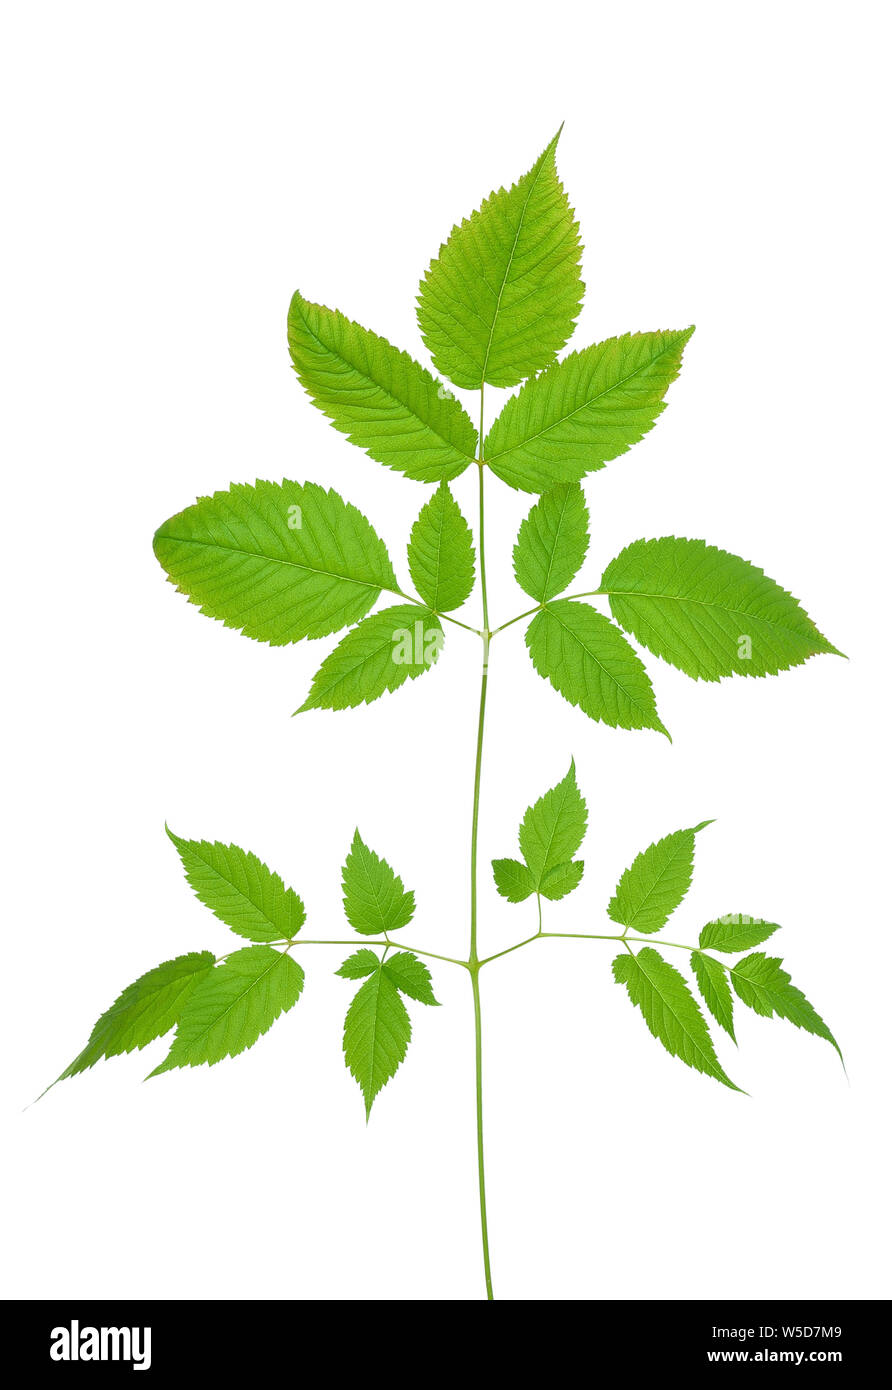 Aruncus dioicus leaf isolated on white background Stock Photo